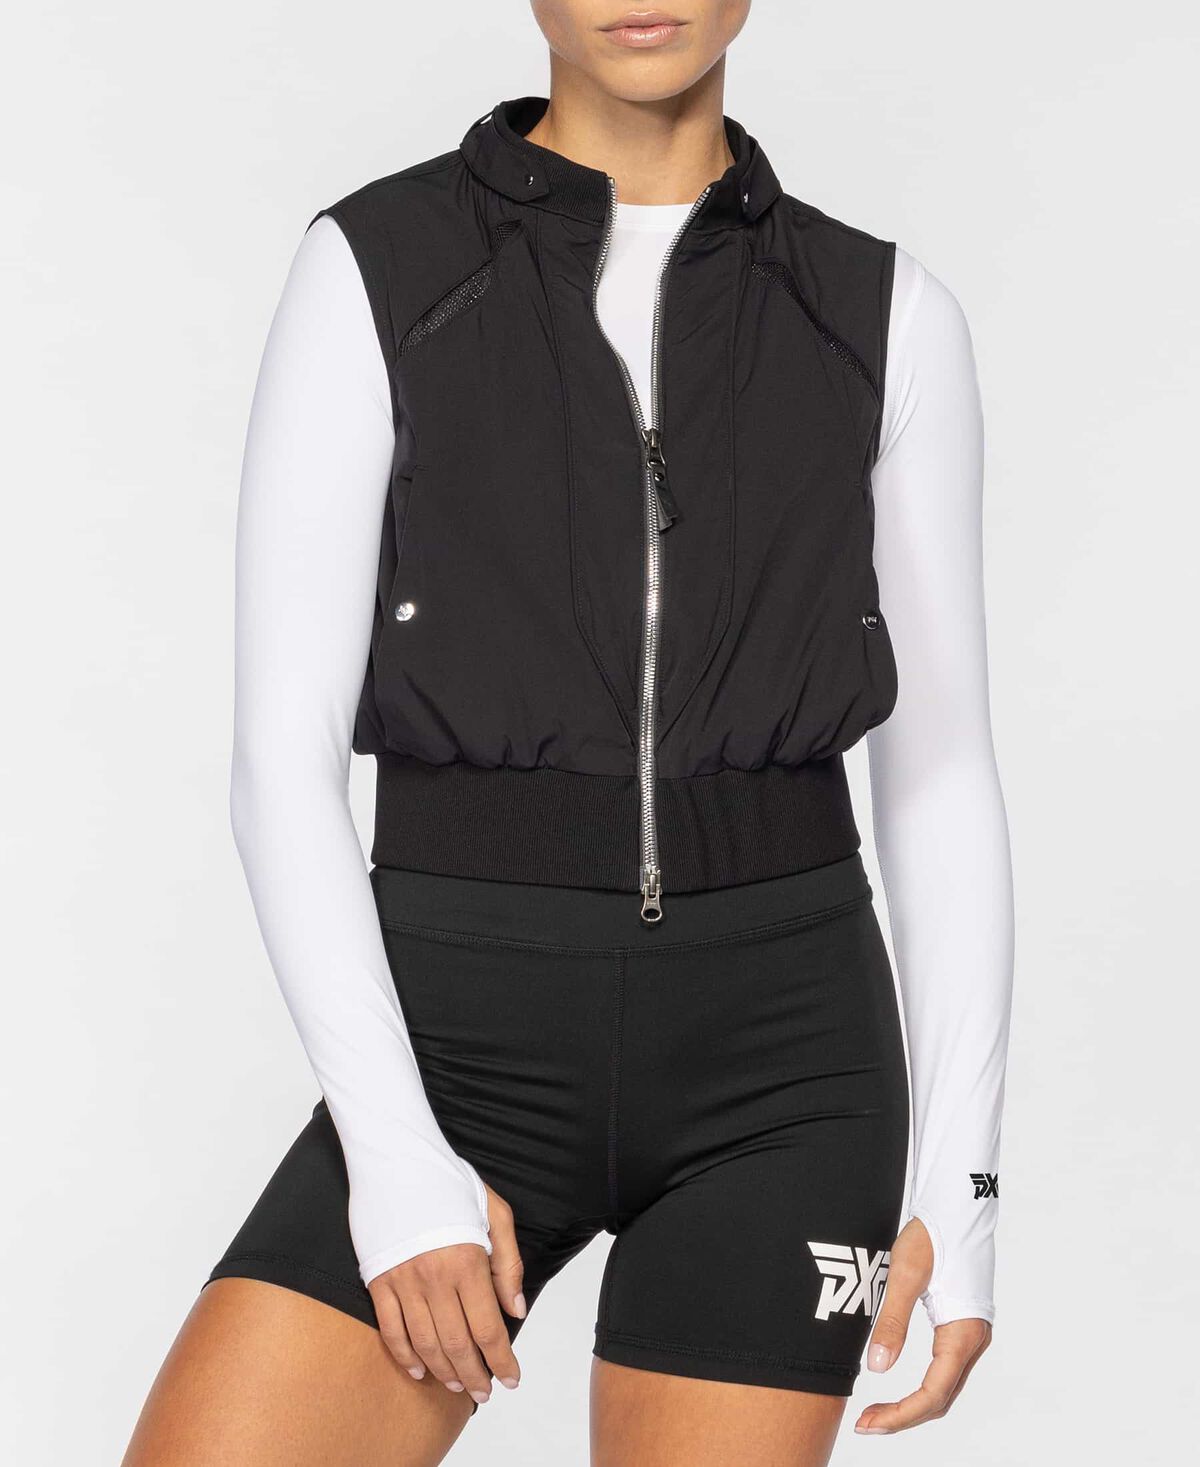 Women's High-Waisted Zip Up Vest - Black - Medium 